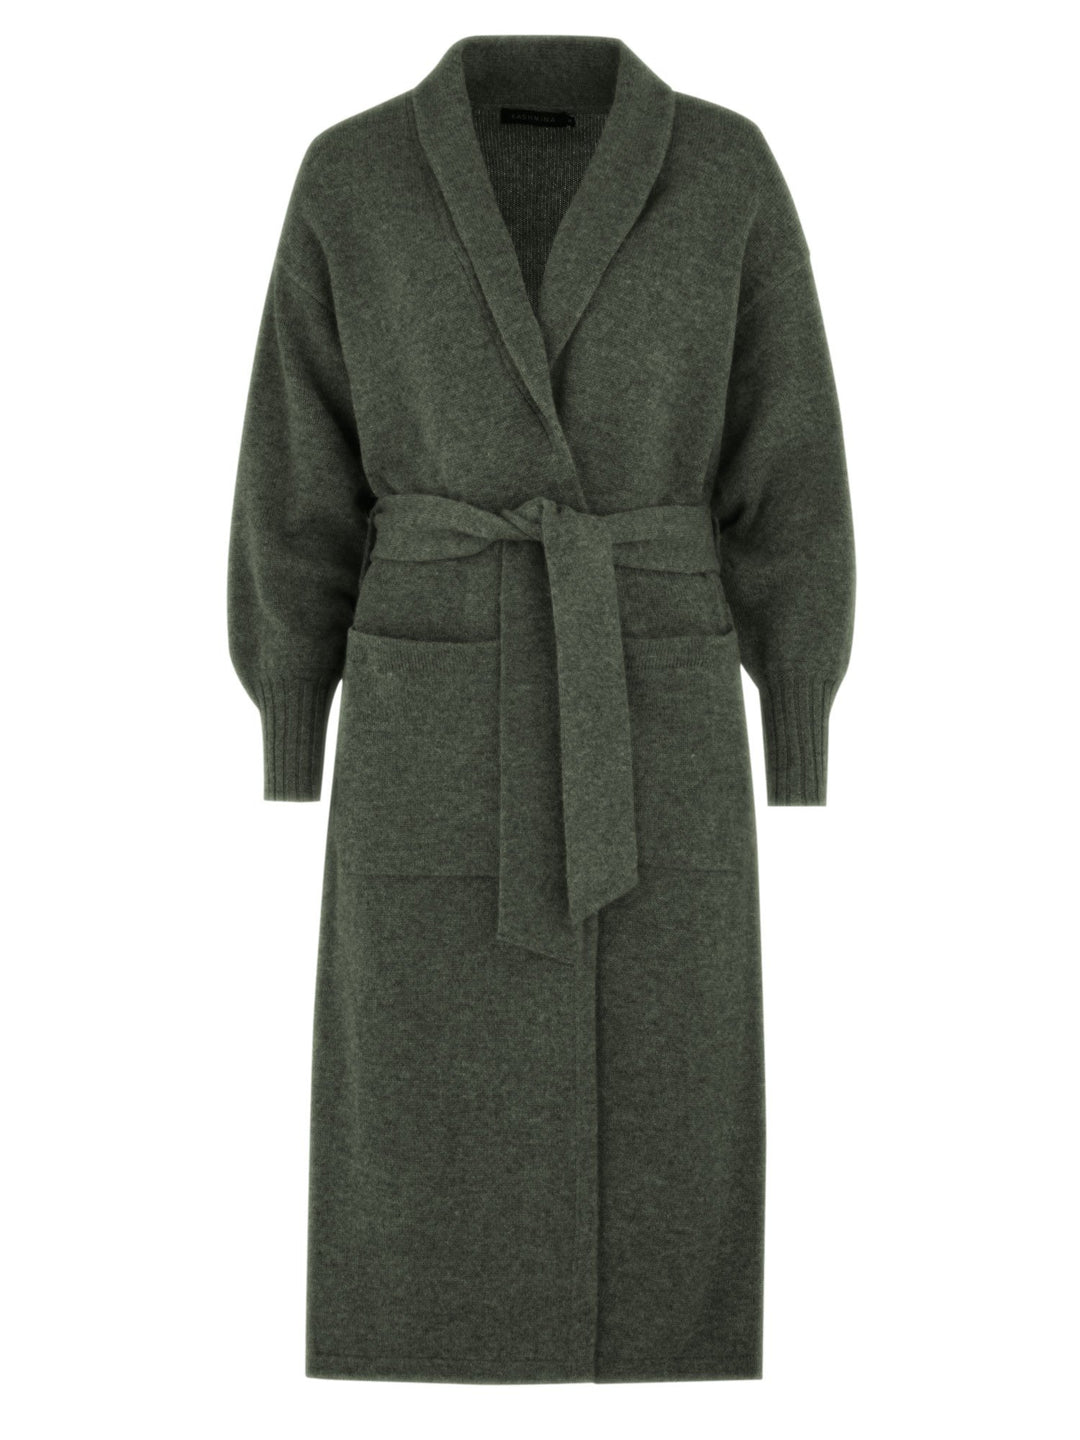 cashmere coat from Kashmina - 100% cashmere